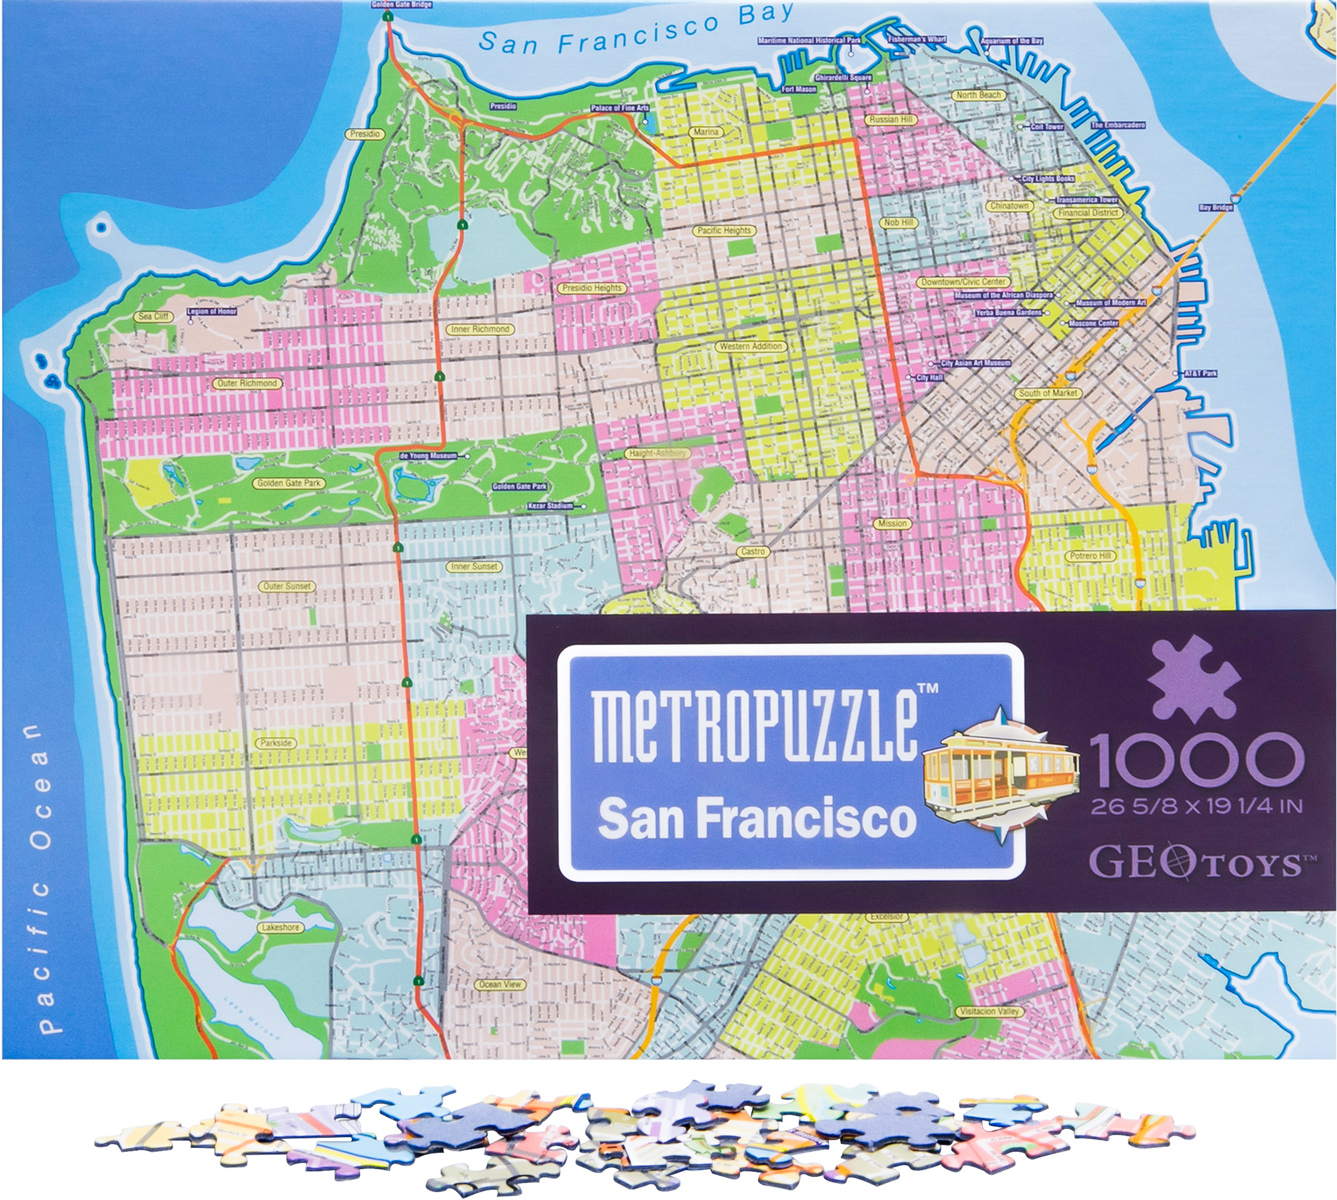 San Francisco MetroPuzzle™ Travel Jigsaw Puzzle